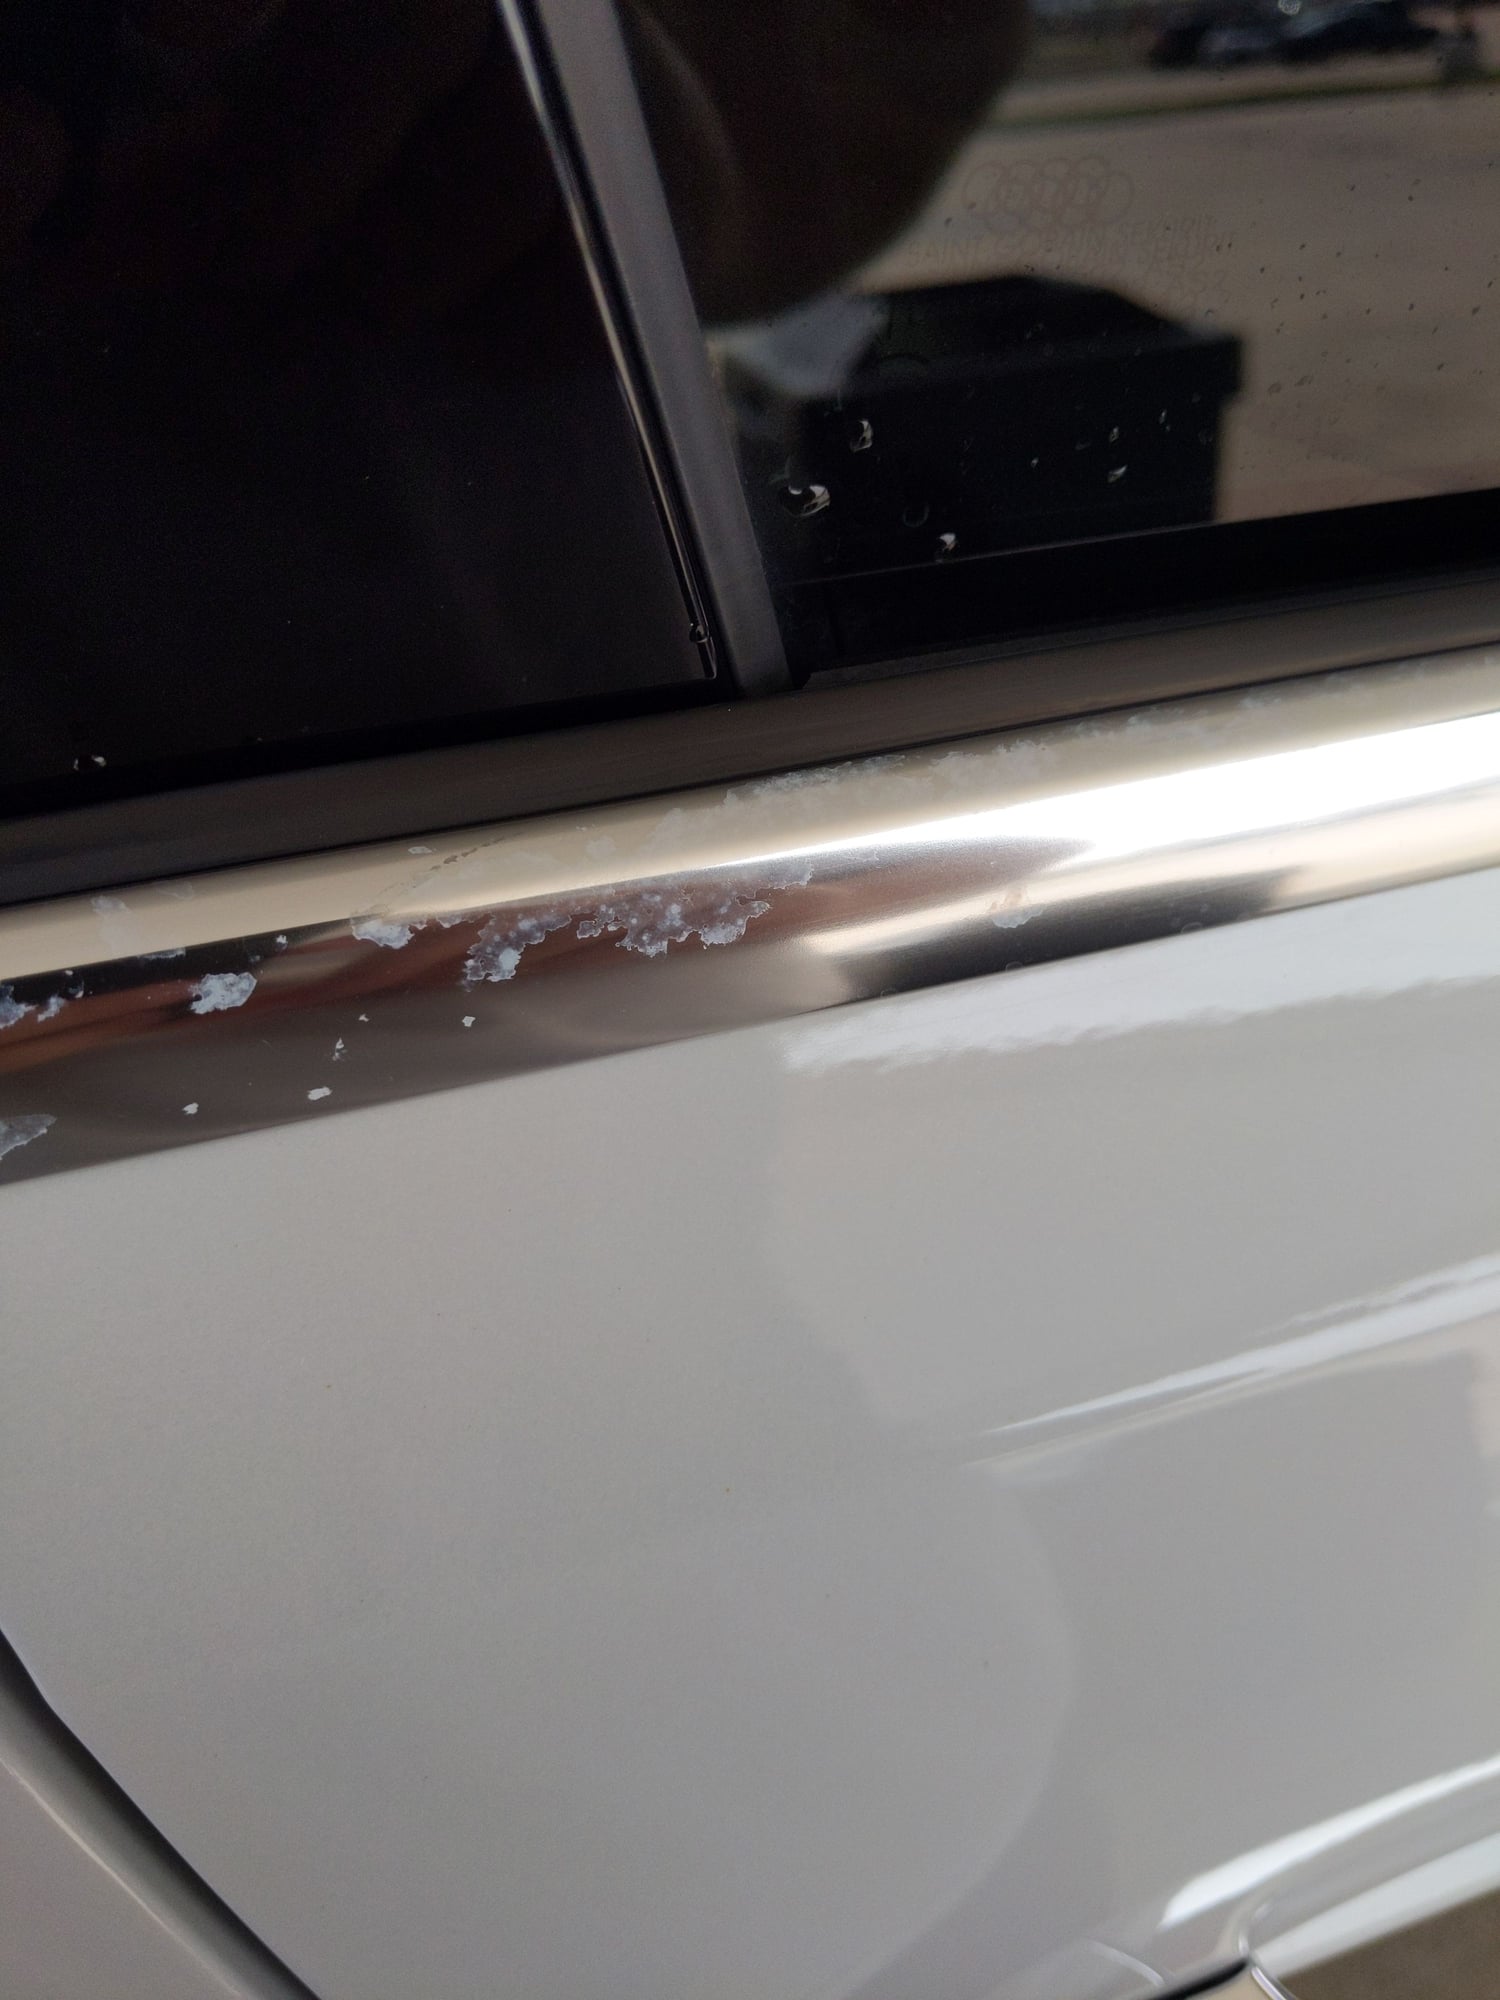 Window trim fading / greying